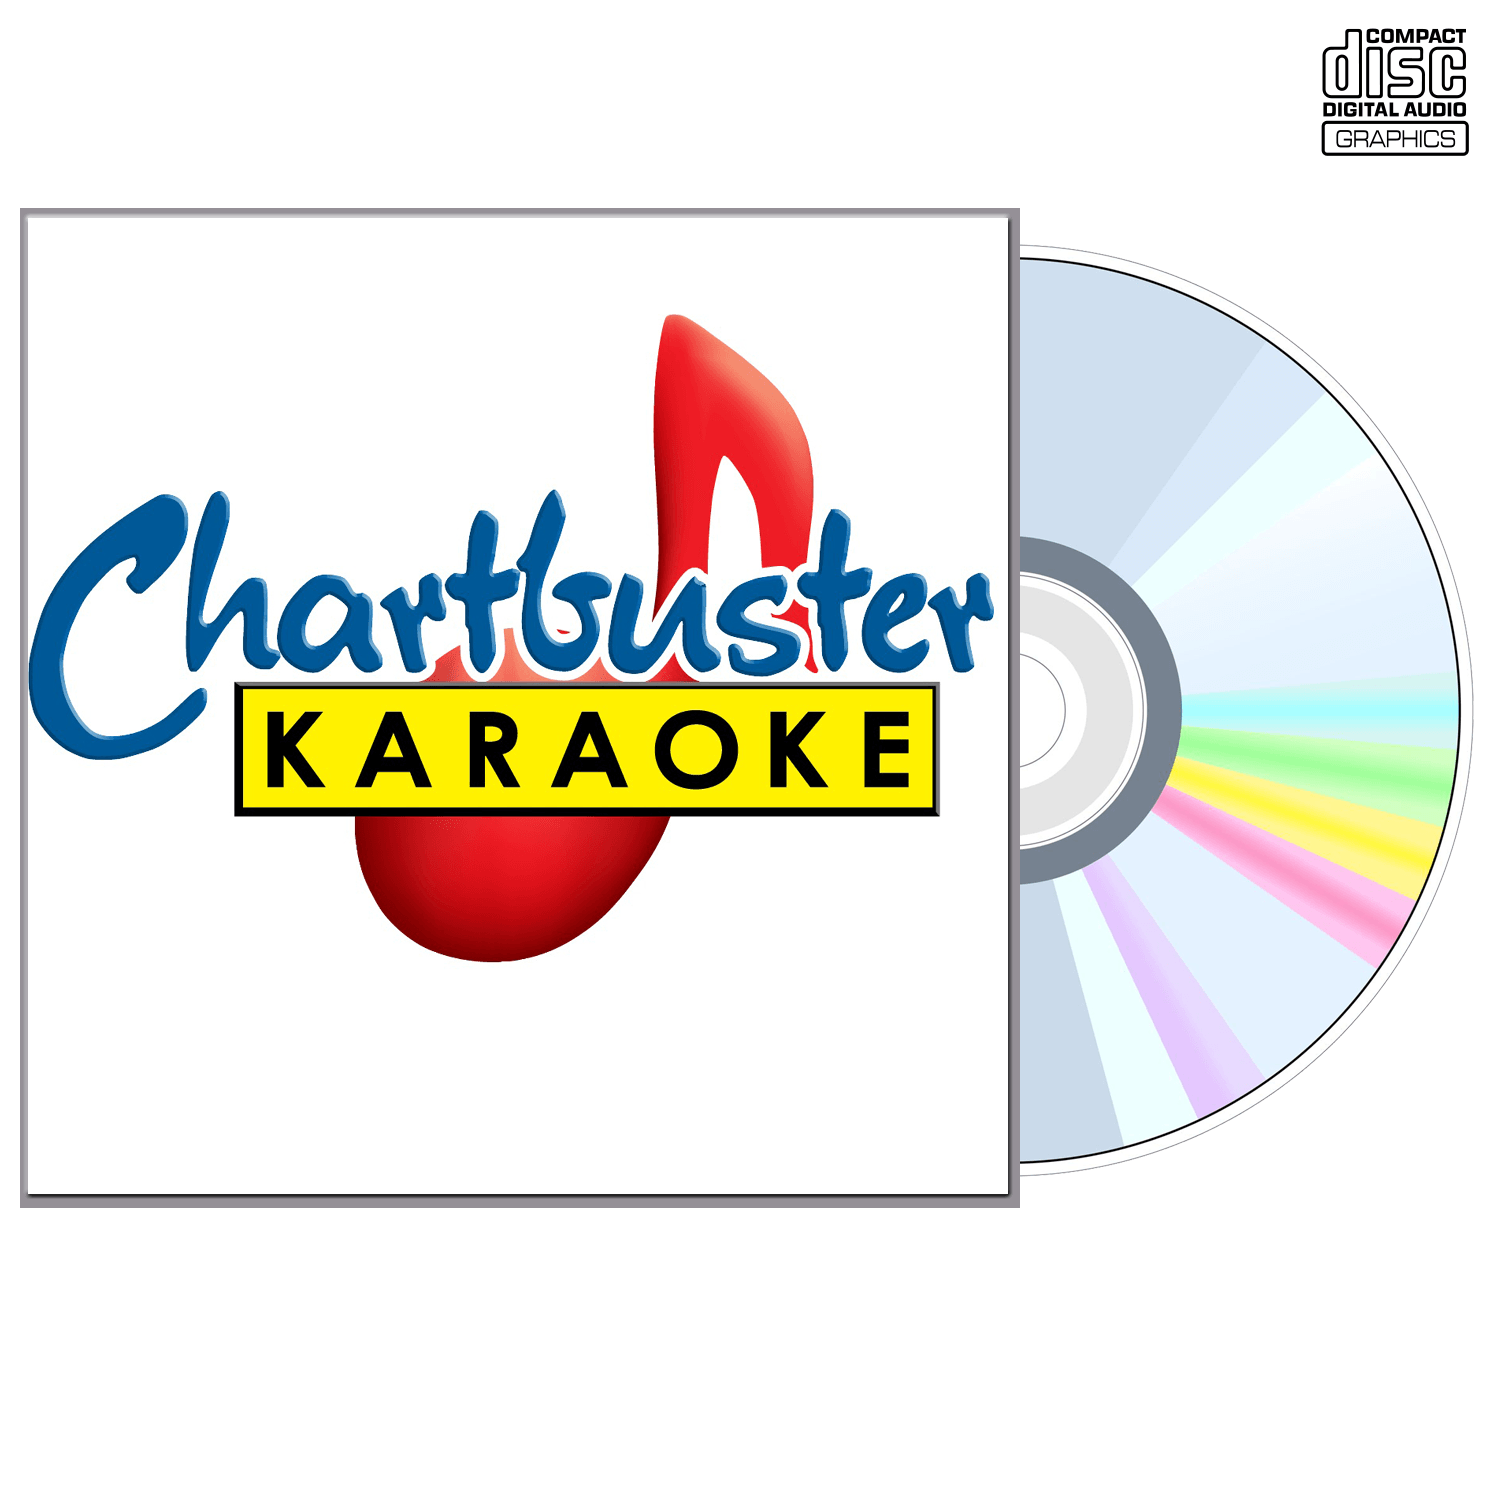 George Strait Vol 2 - CD+G - Chartbuster Karaoke - Karaoke Home Entertainment